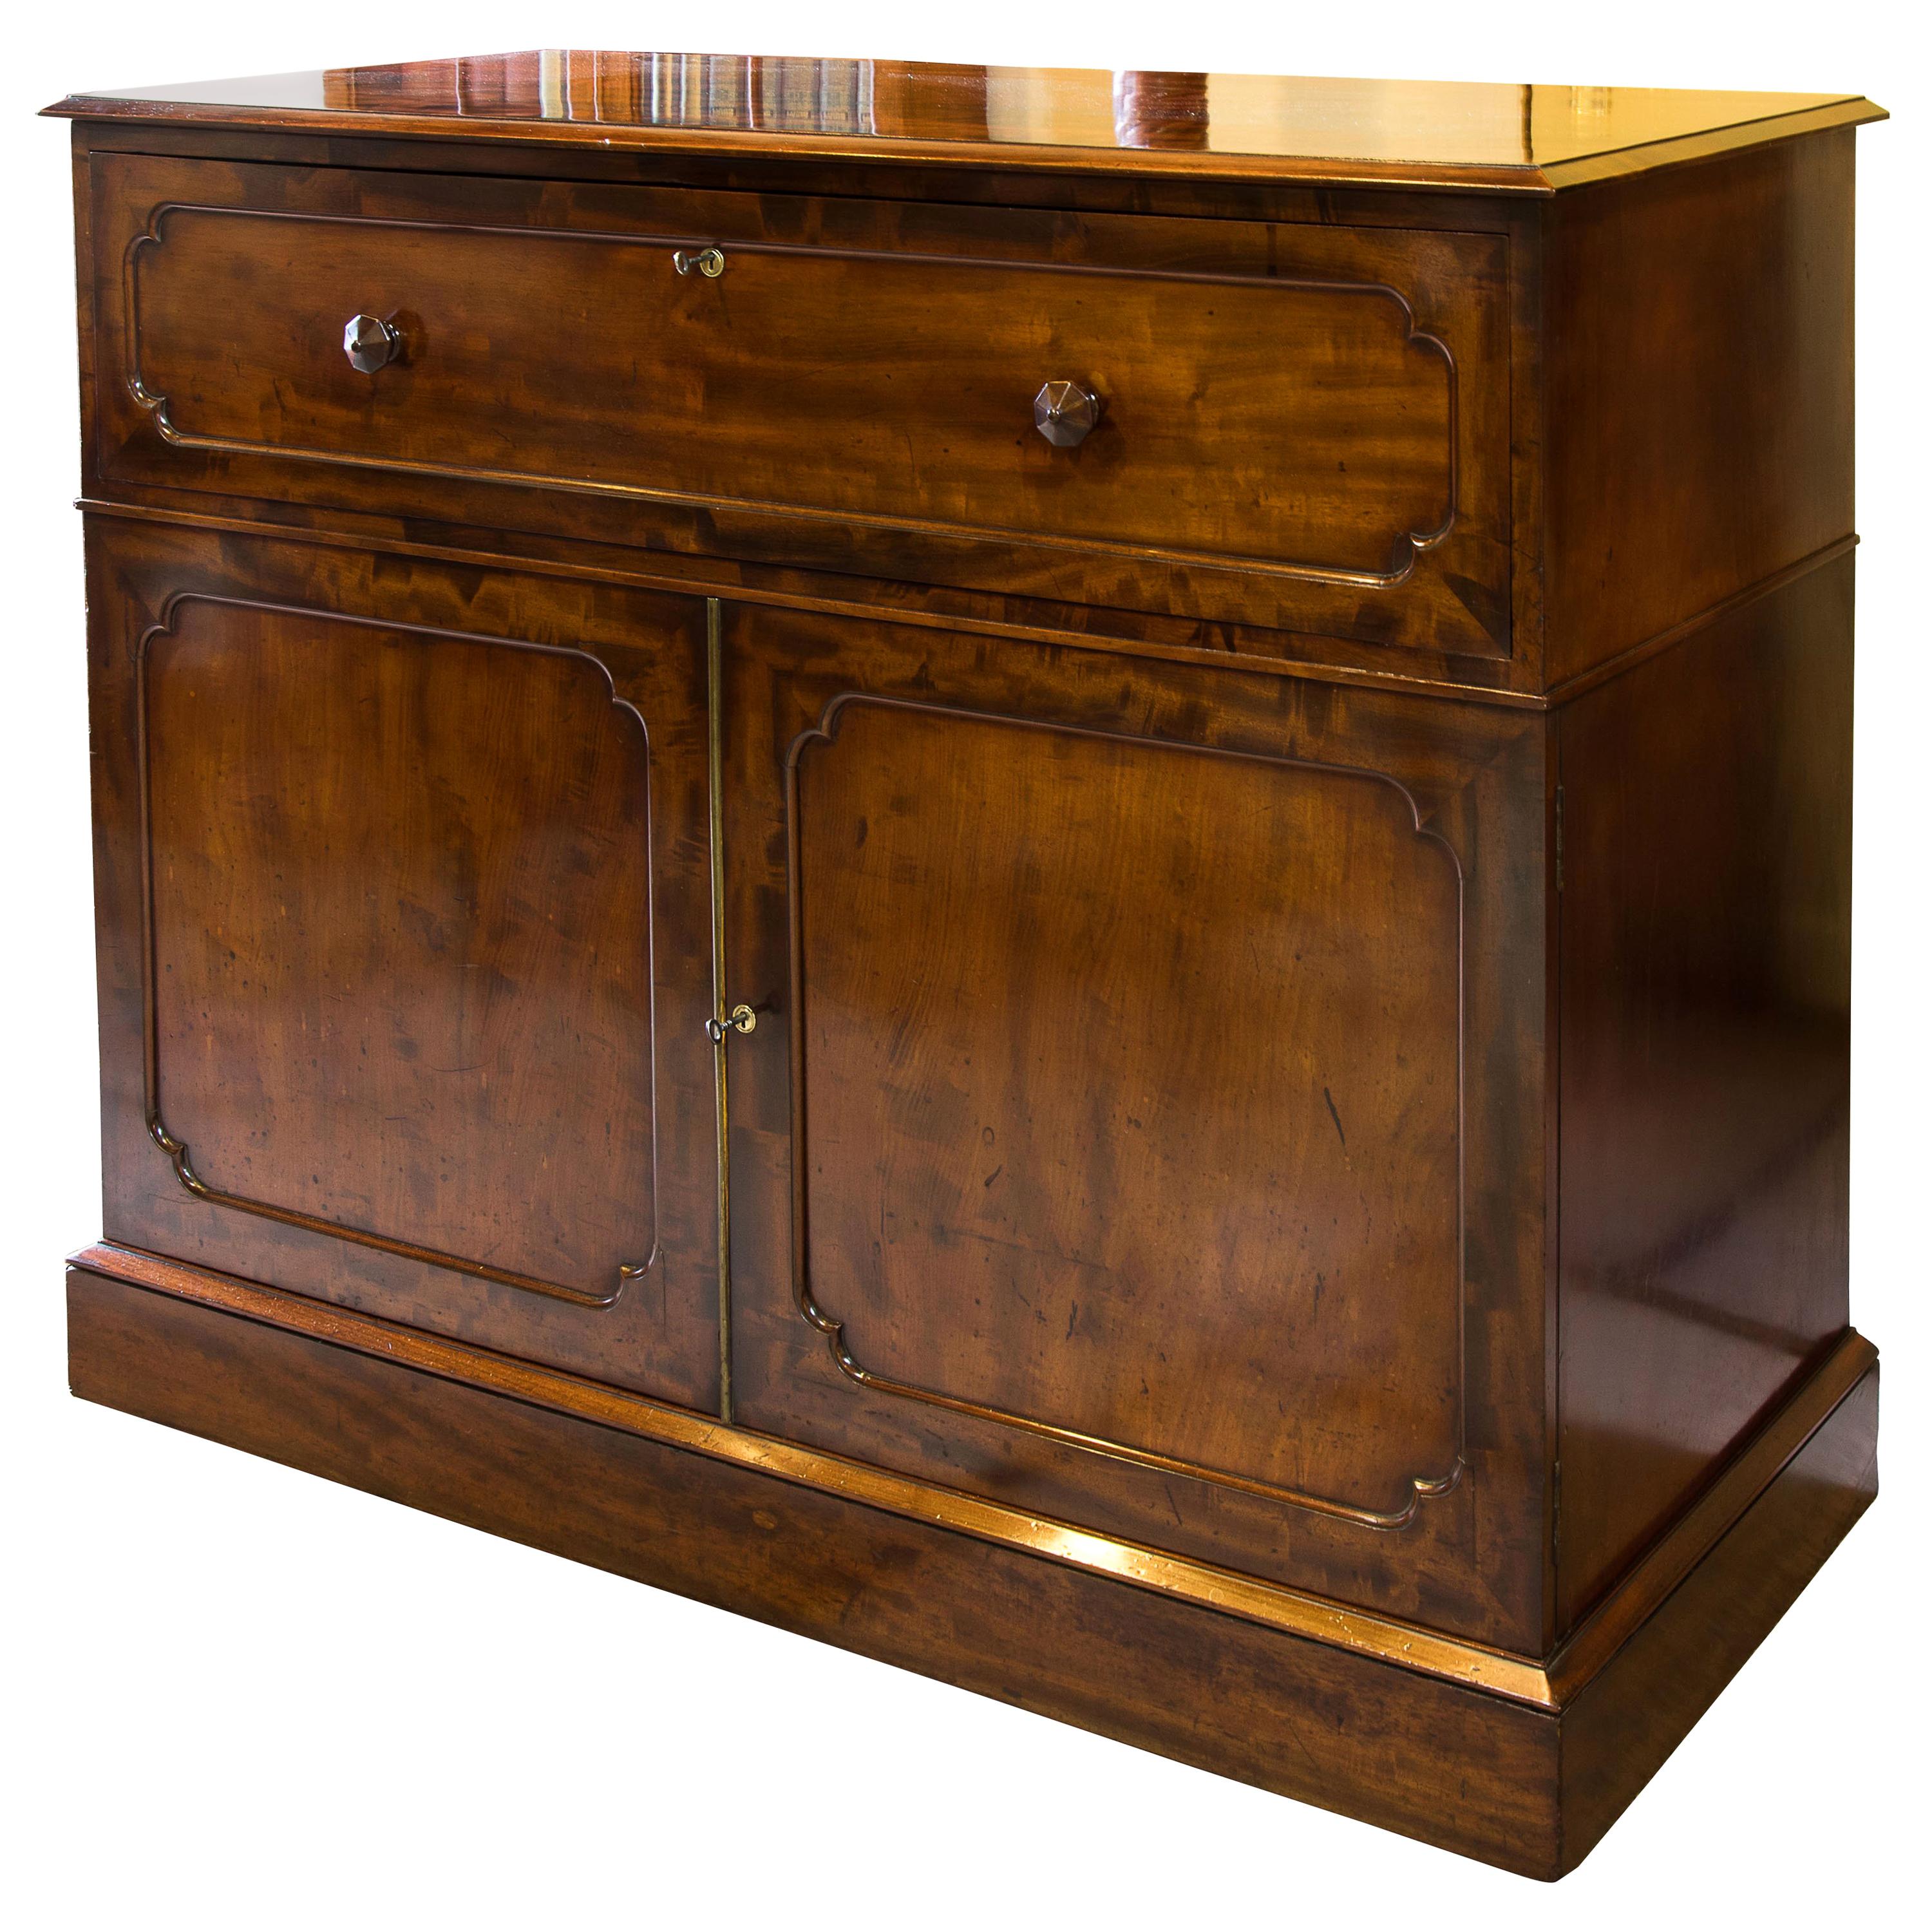  19thc mahogany secretaire untouched condition c1885 For Sale